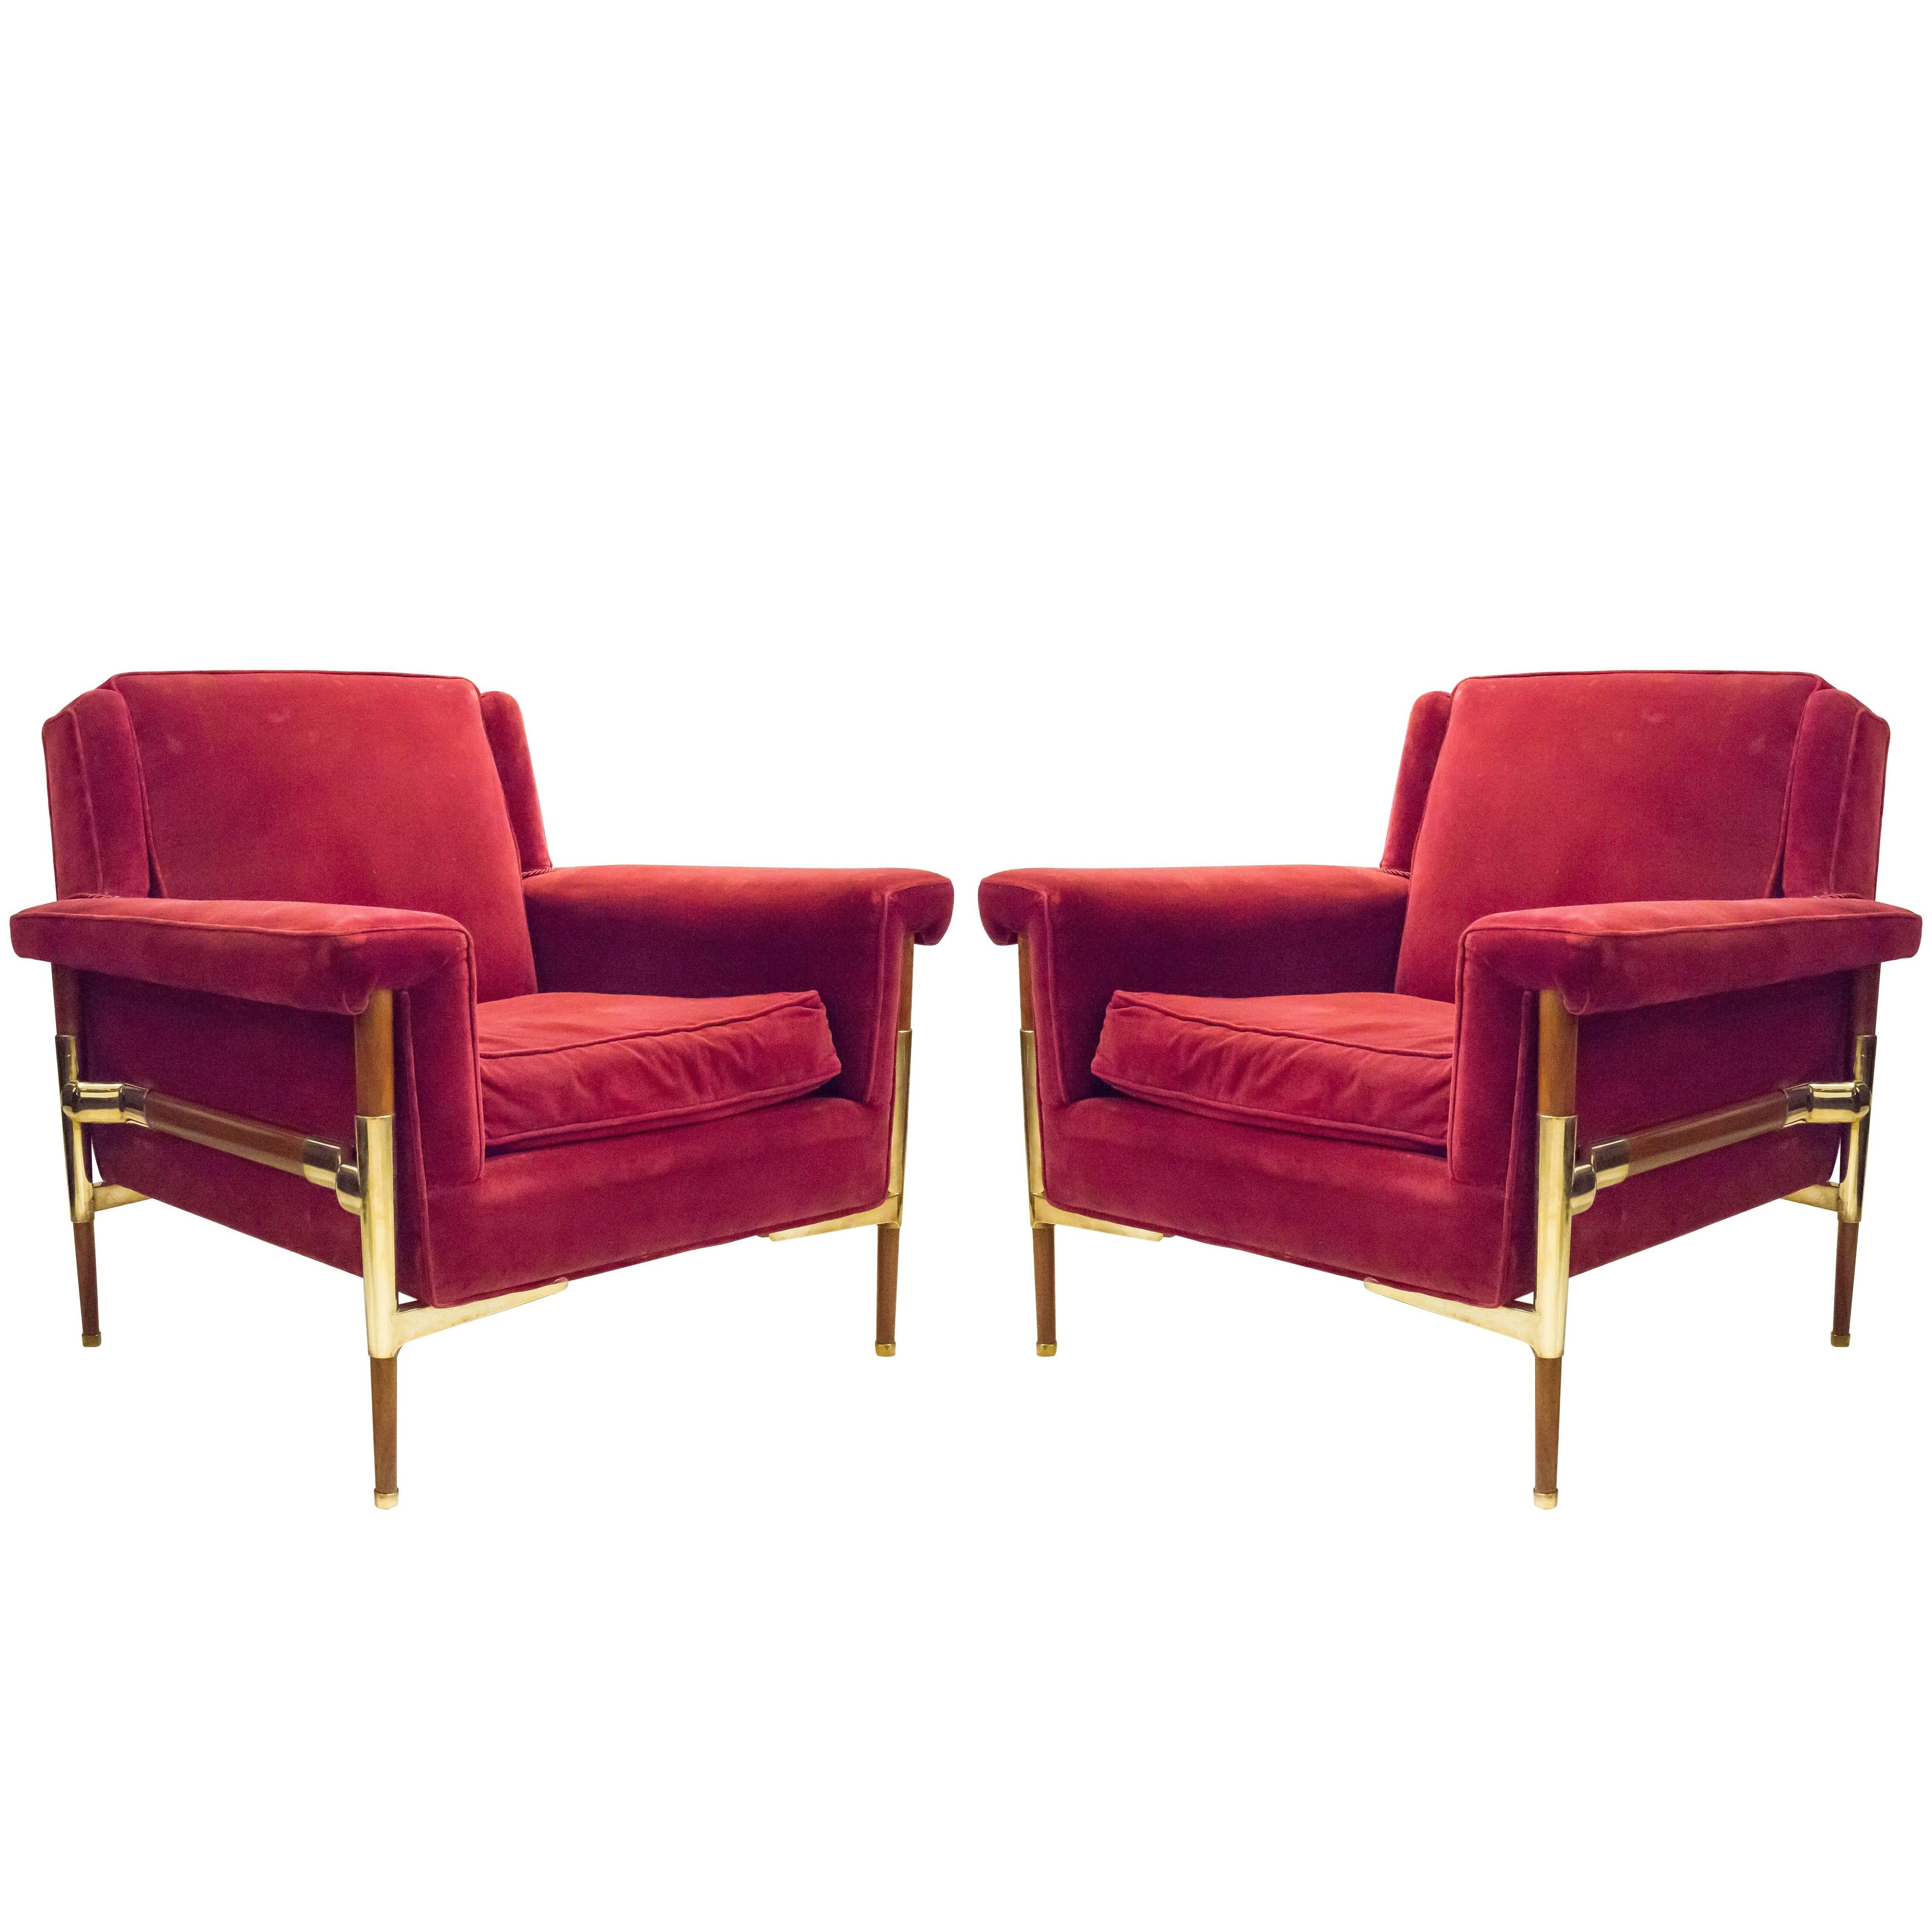 Unusual Pair of Italian Midcentury Lounge Chairs